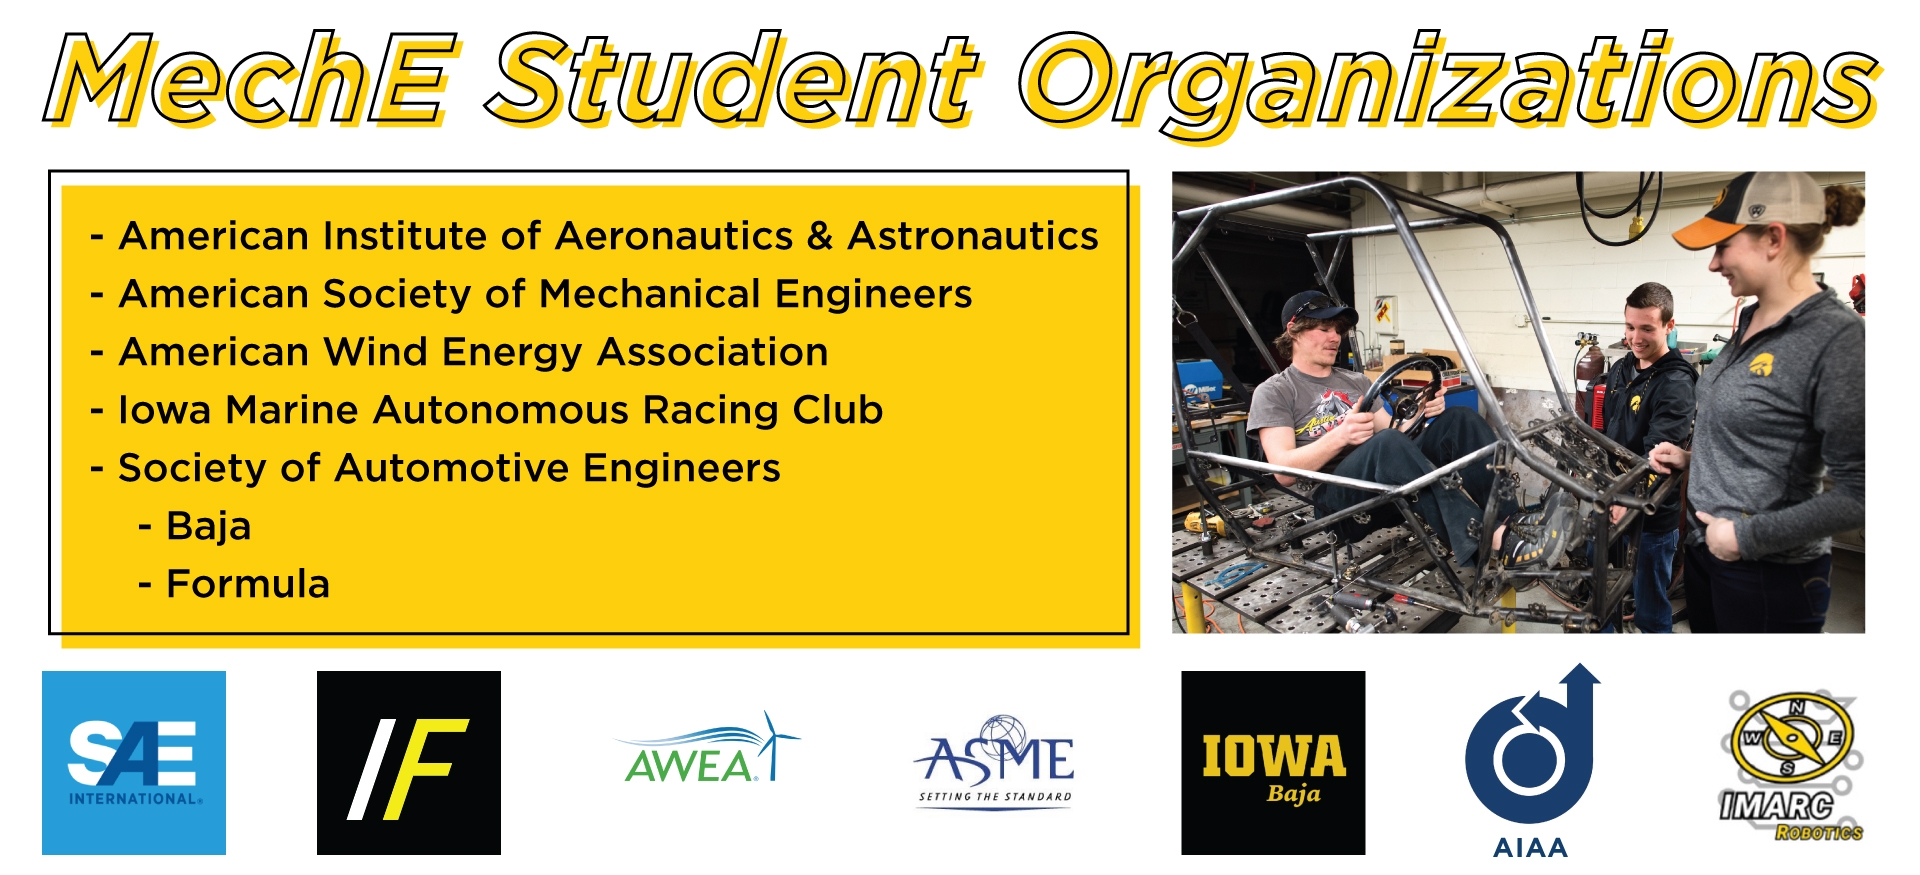 Mechanical Engineering Student organizations